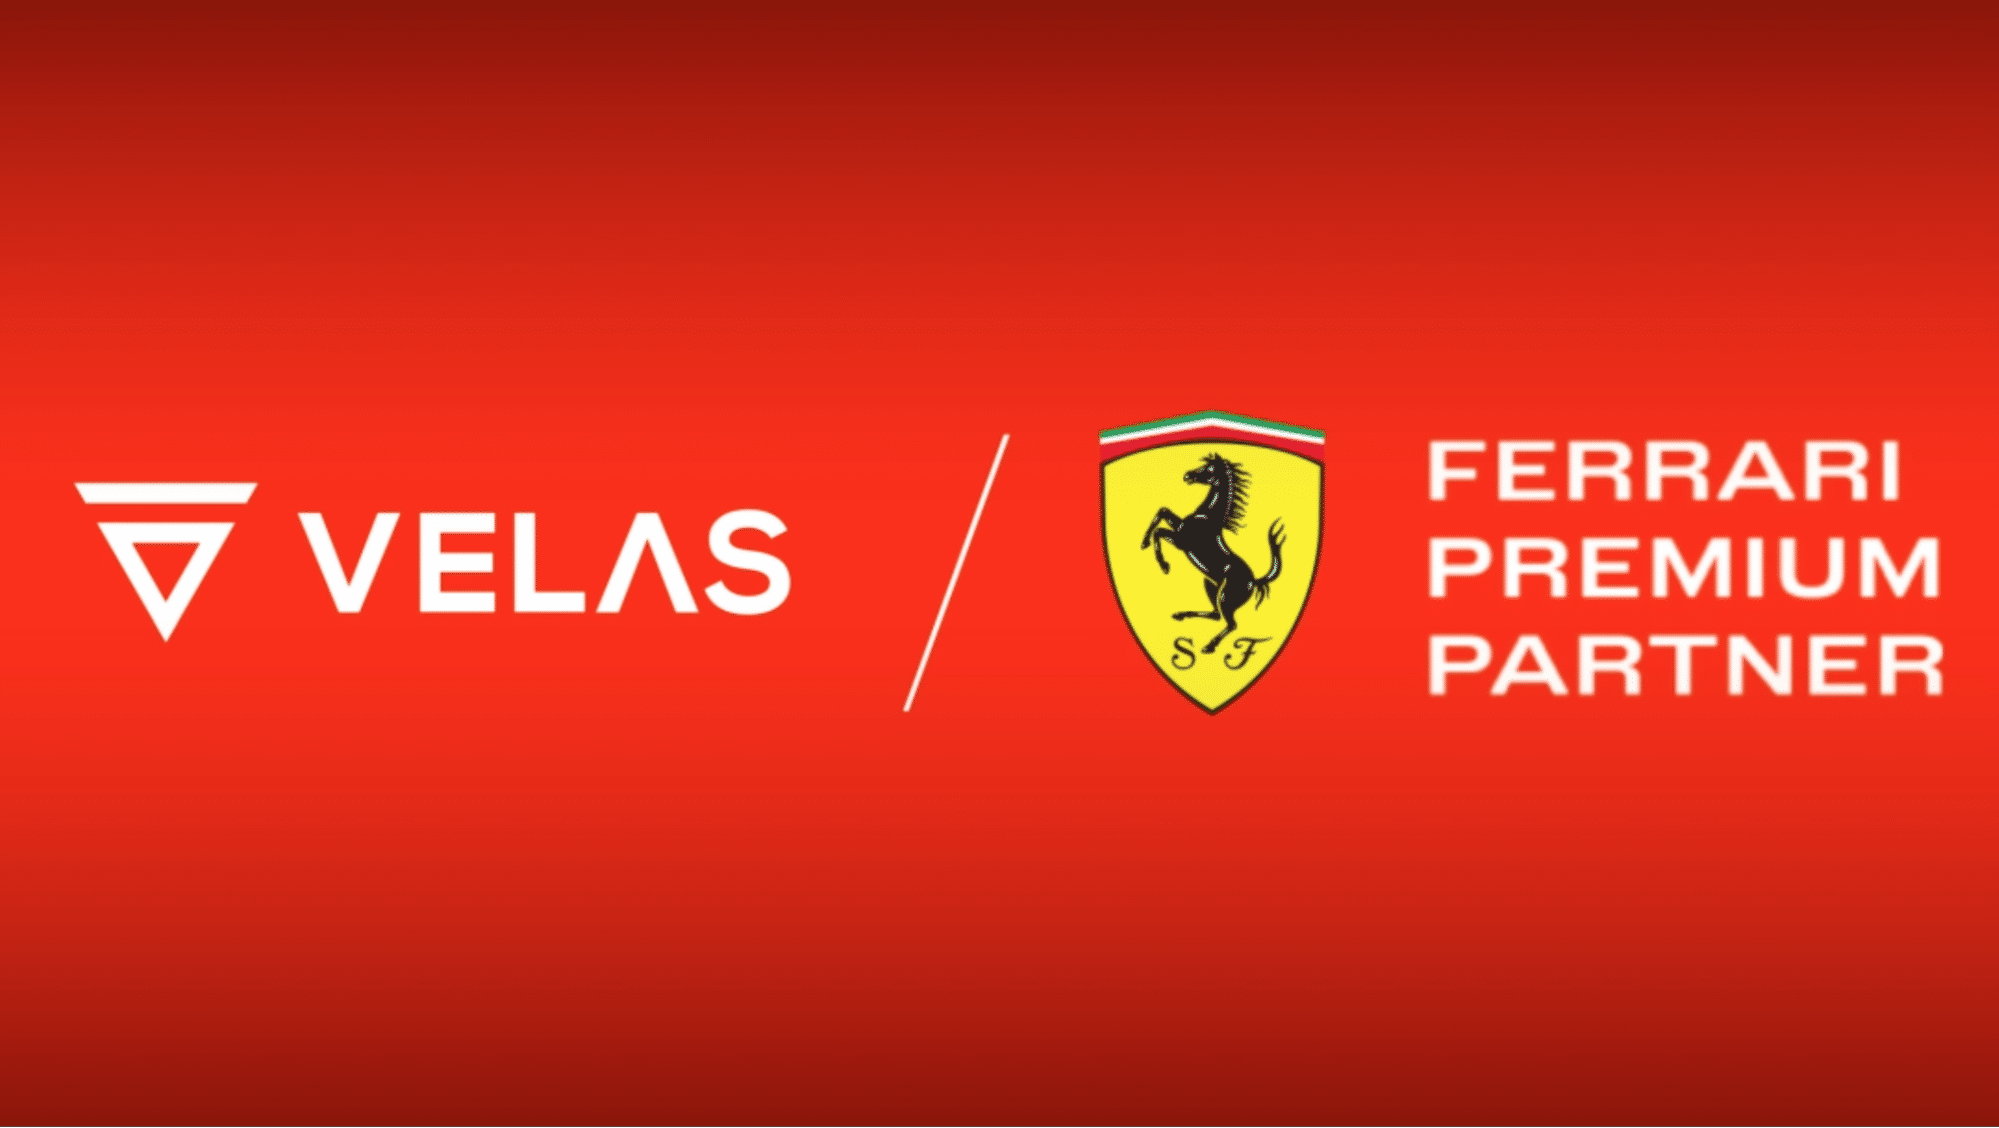 Velas powers into Formula 1 with multi-year Scuderia Ferrari Partnership - 1